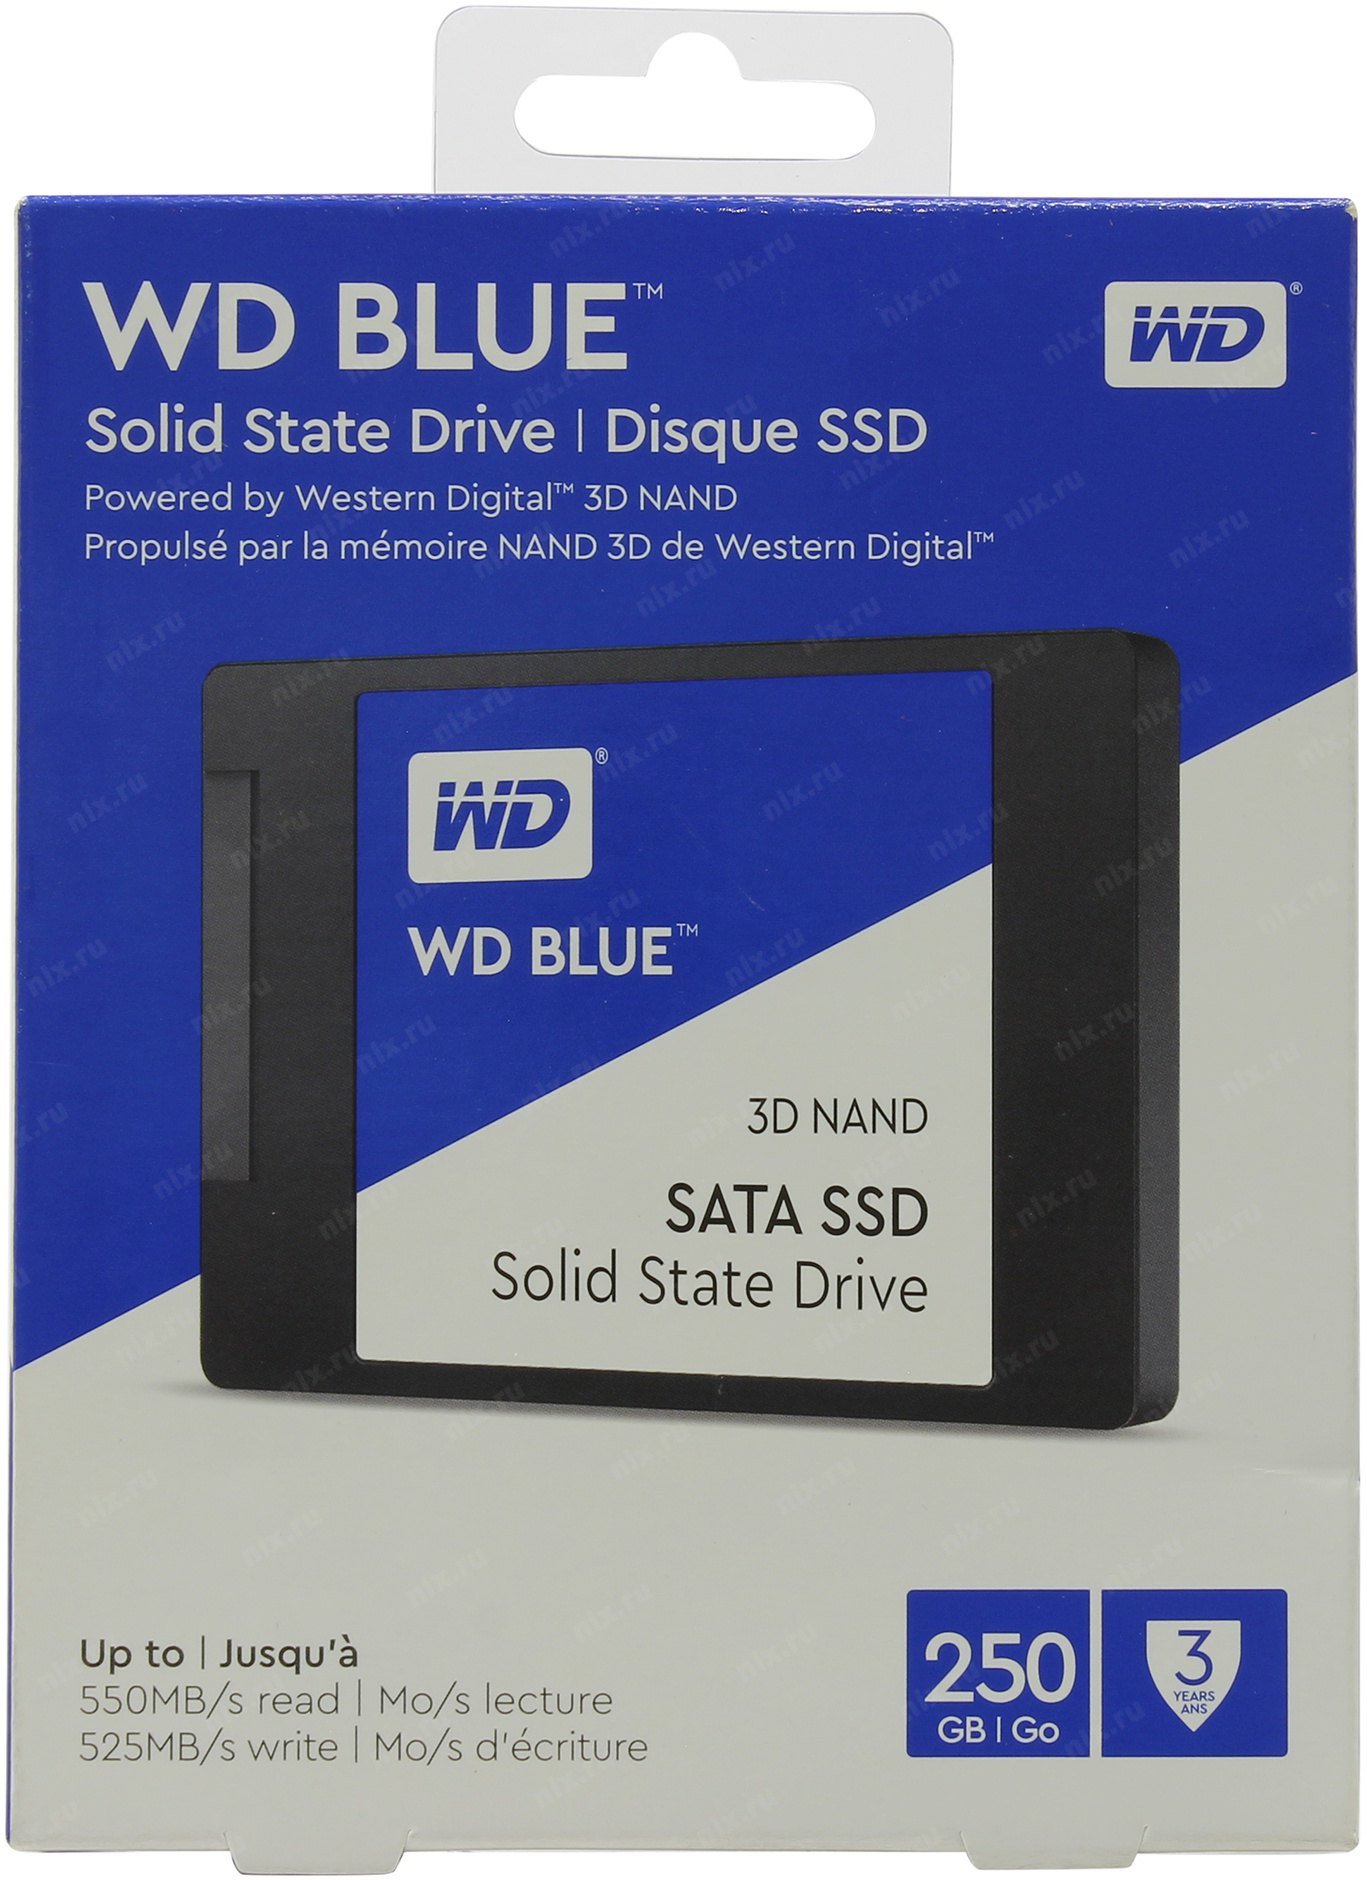 Wds100t2b0a. WD 500gb SSD. WD 250gb SSD. WD Blue SATA SSD 2.5 1 TB. Western Digital SATA SSD 1tb.